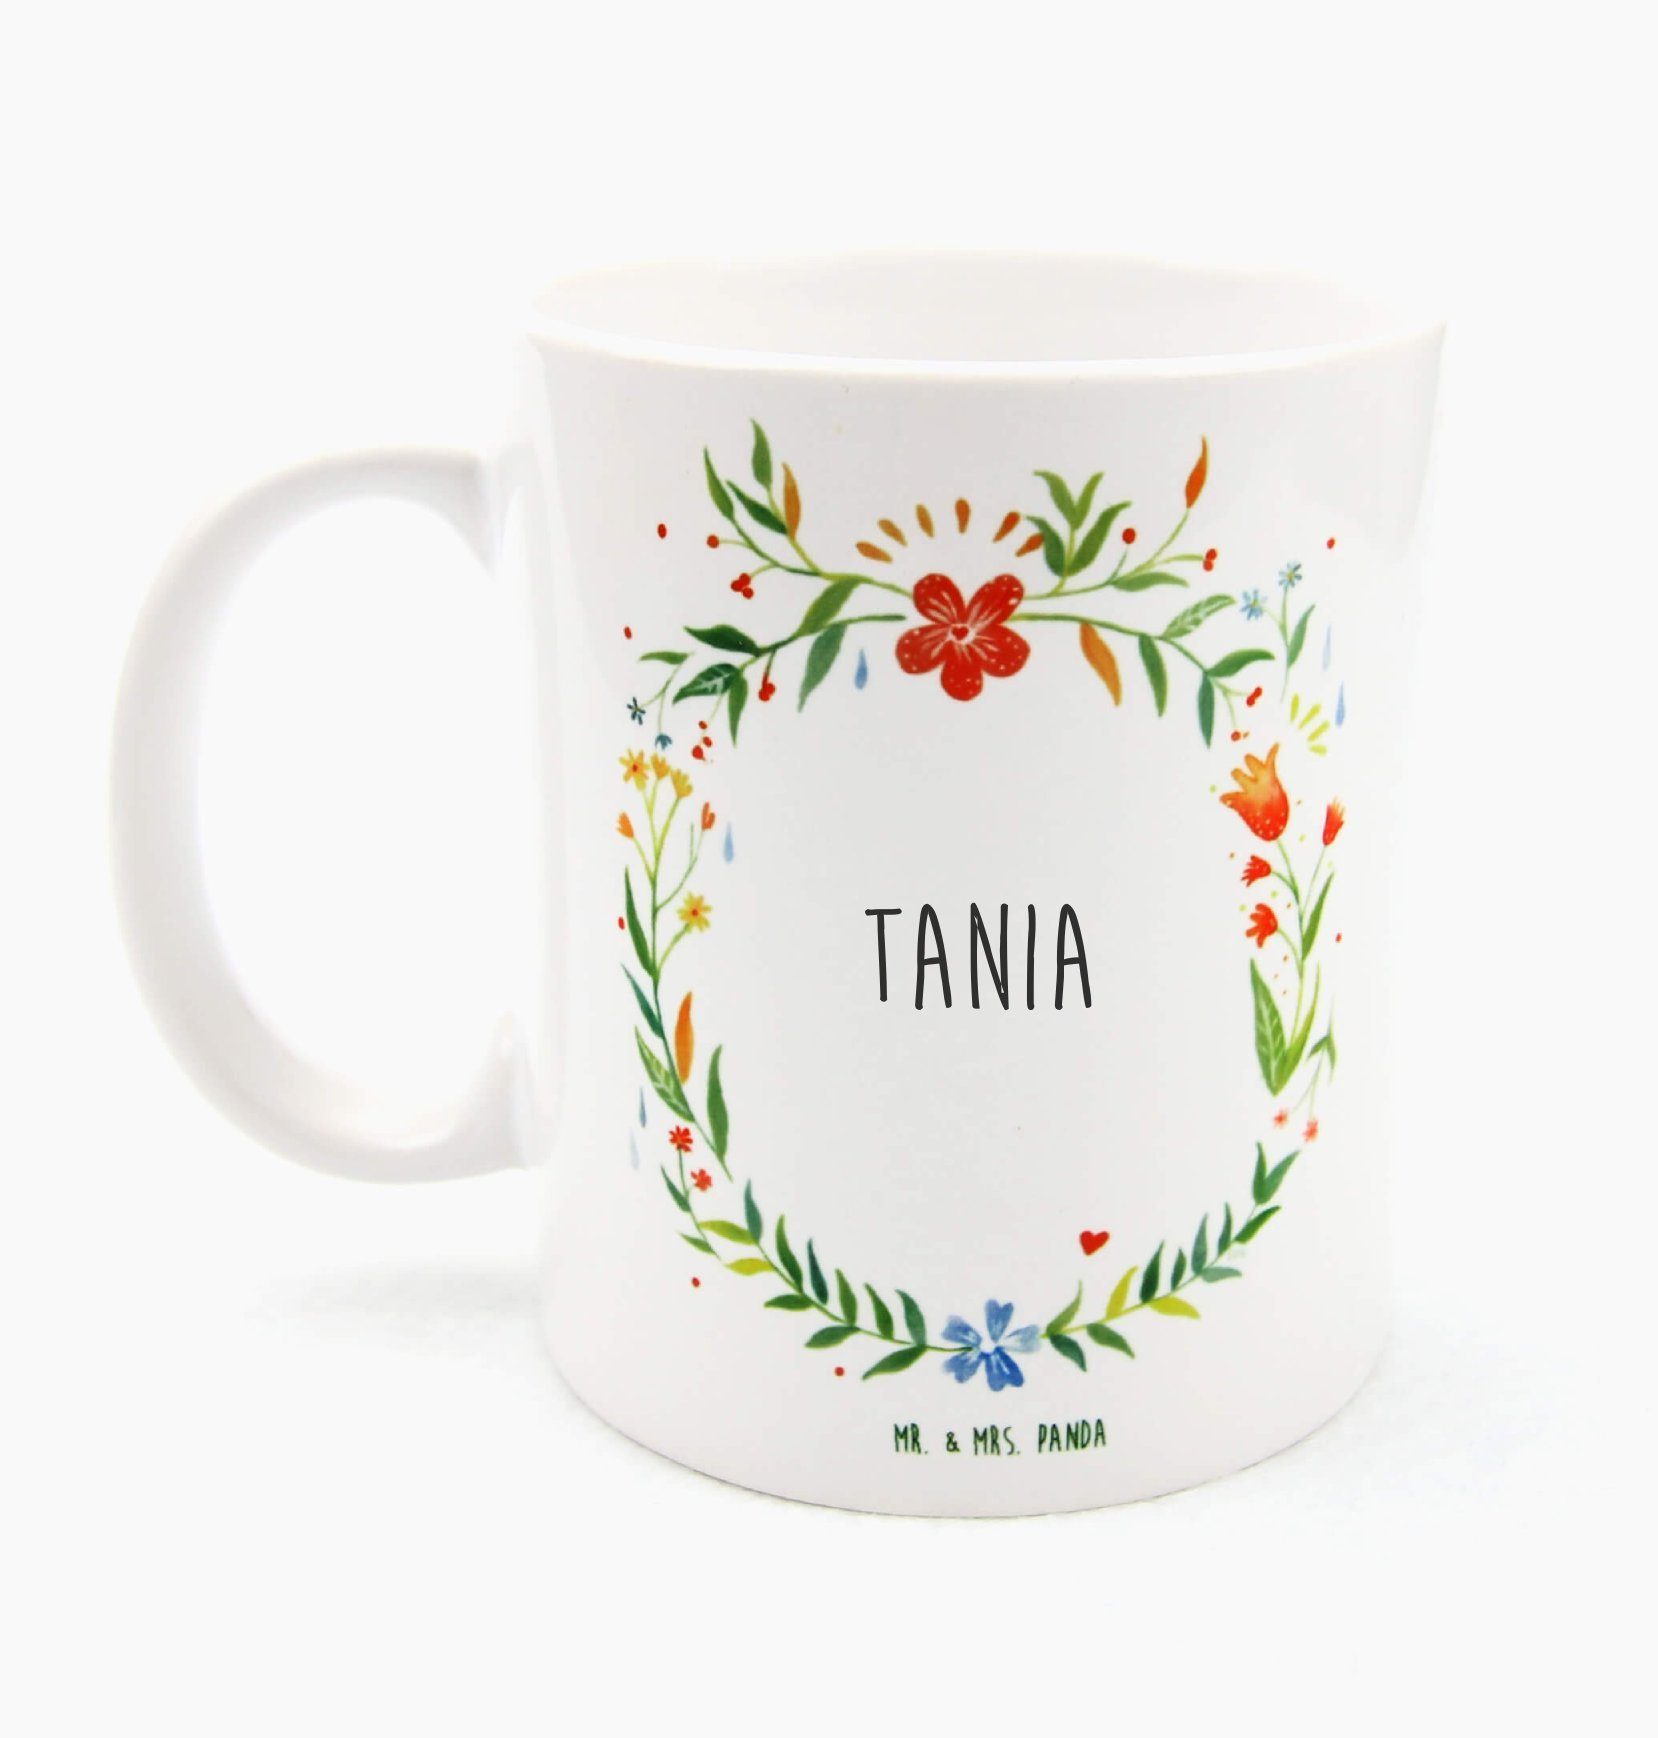 Mr. & Mrs. Panda Tasse Tania - Geschenk, Kaffeetasse, Tasse Sprüche, Porzellantasse, Becher, Keramik